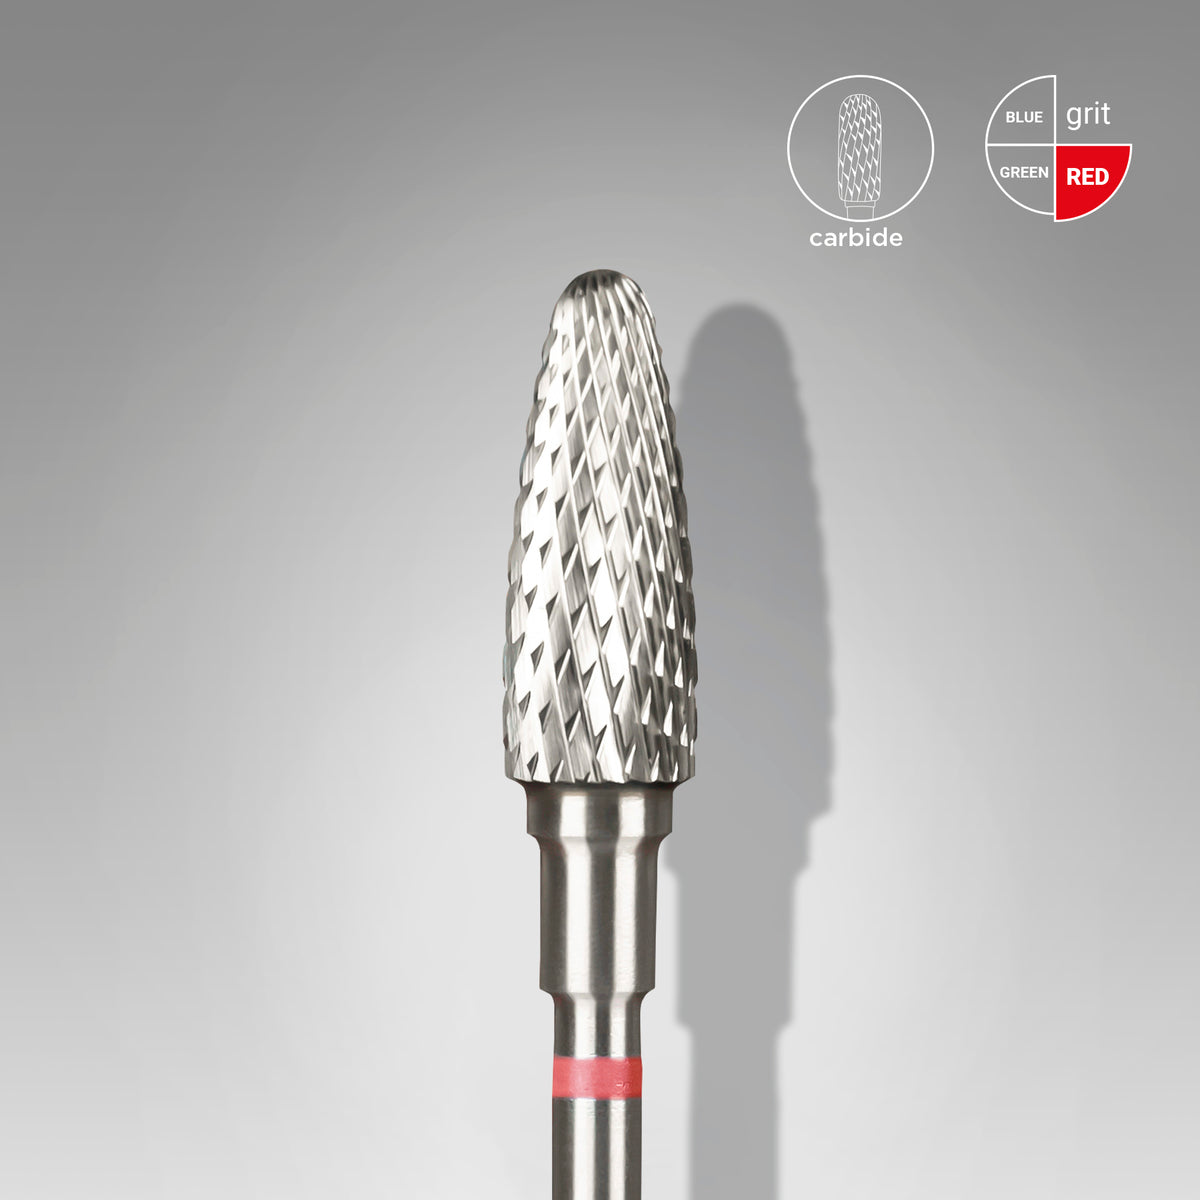 Carbide nail drill bit corn red EXPERT head diameter 5 mm / working part 13 mm